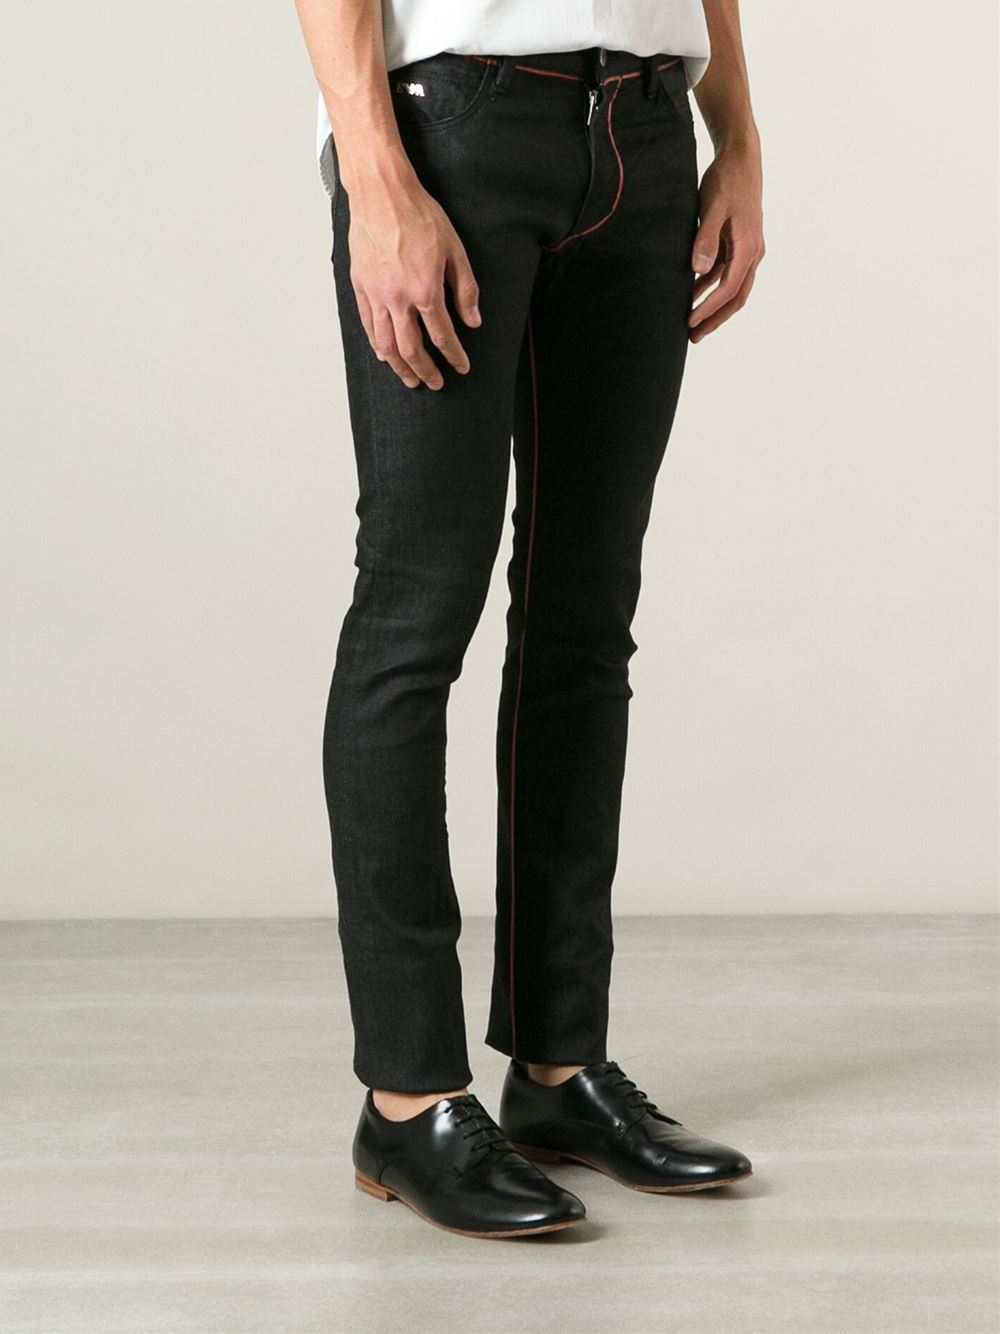 Lyst - Emporio Armani Skinny Jeans in Black for Men